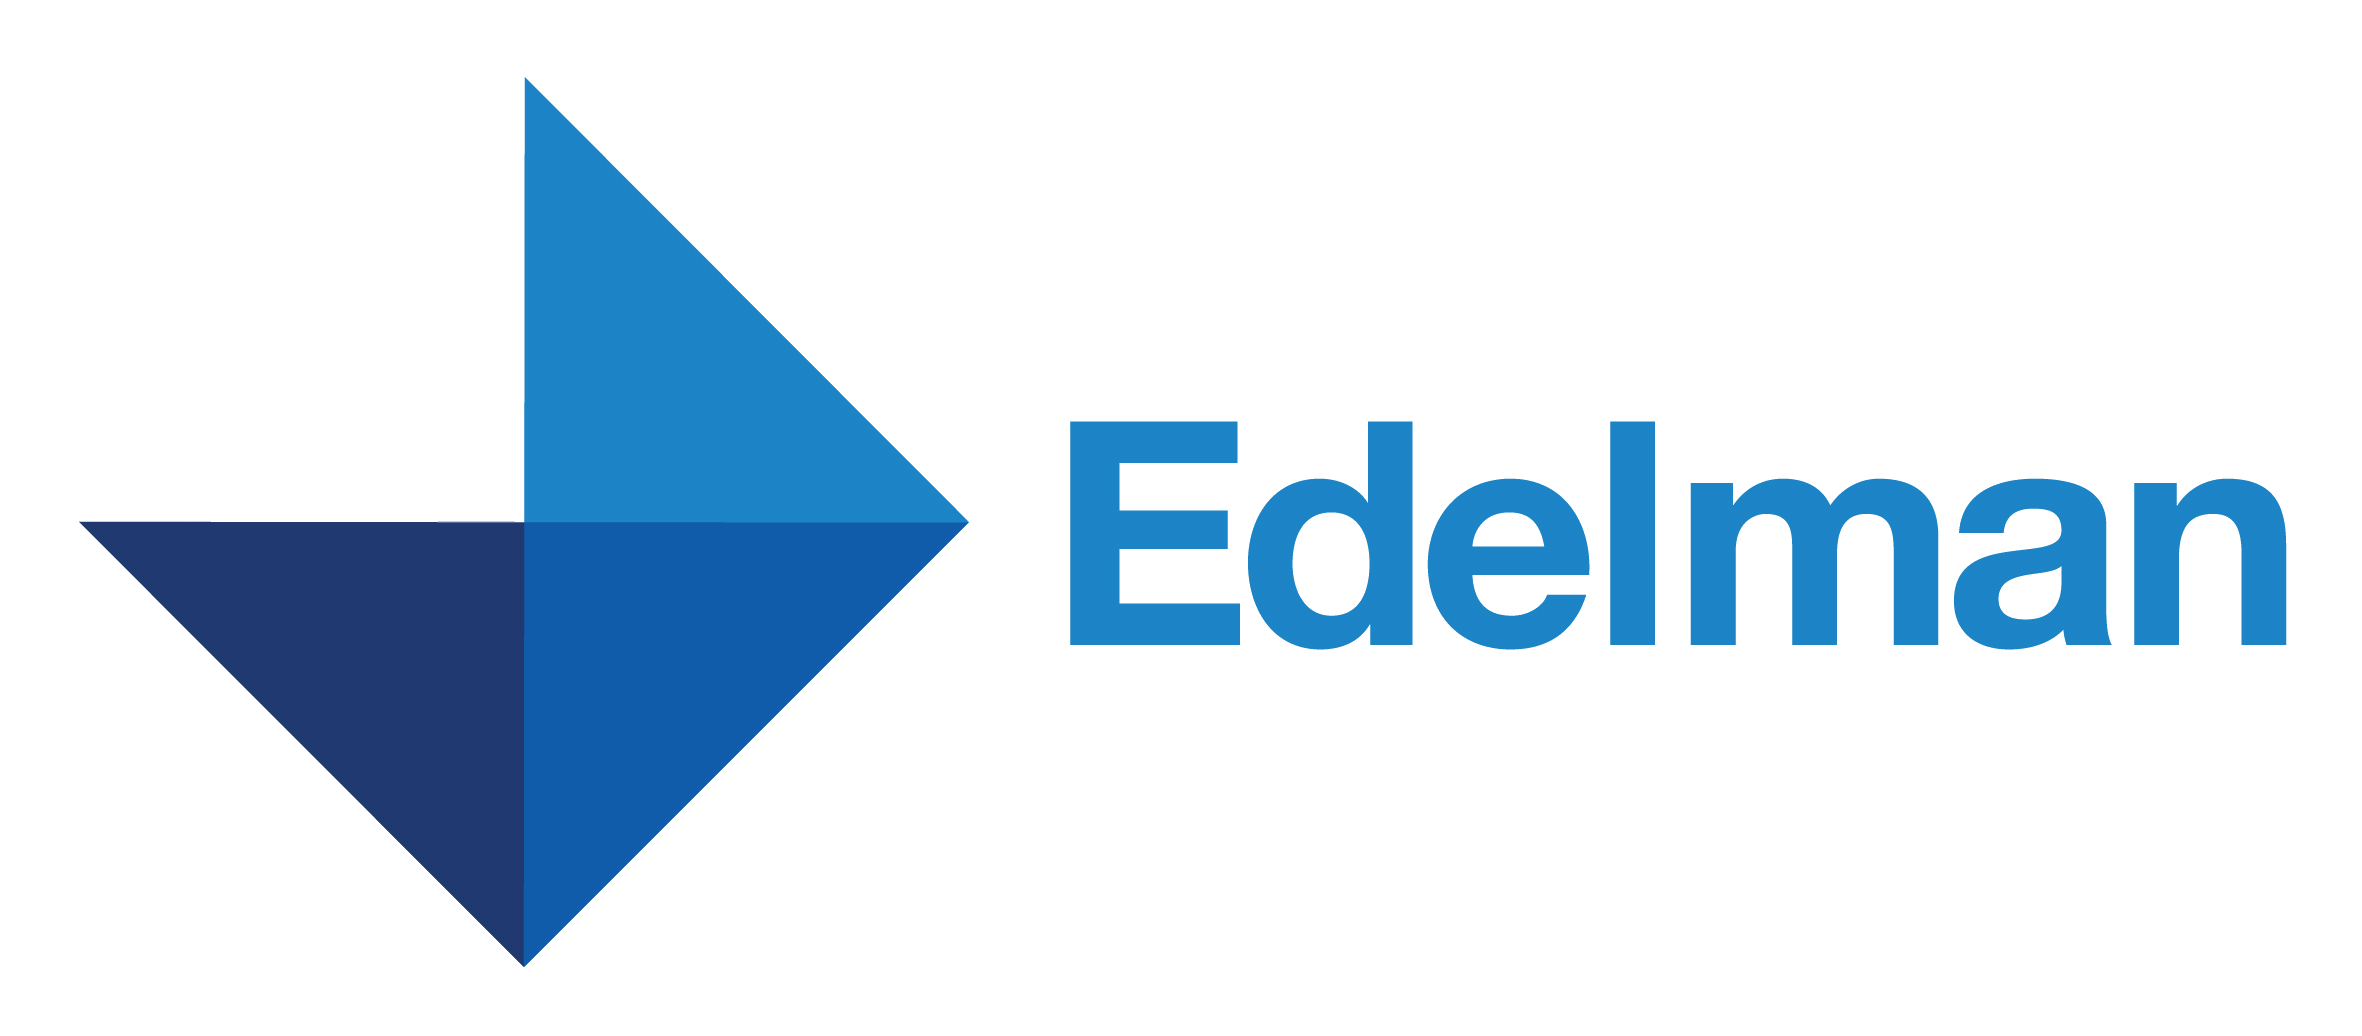 Edelman-logo-Transparent.png